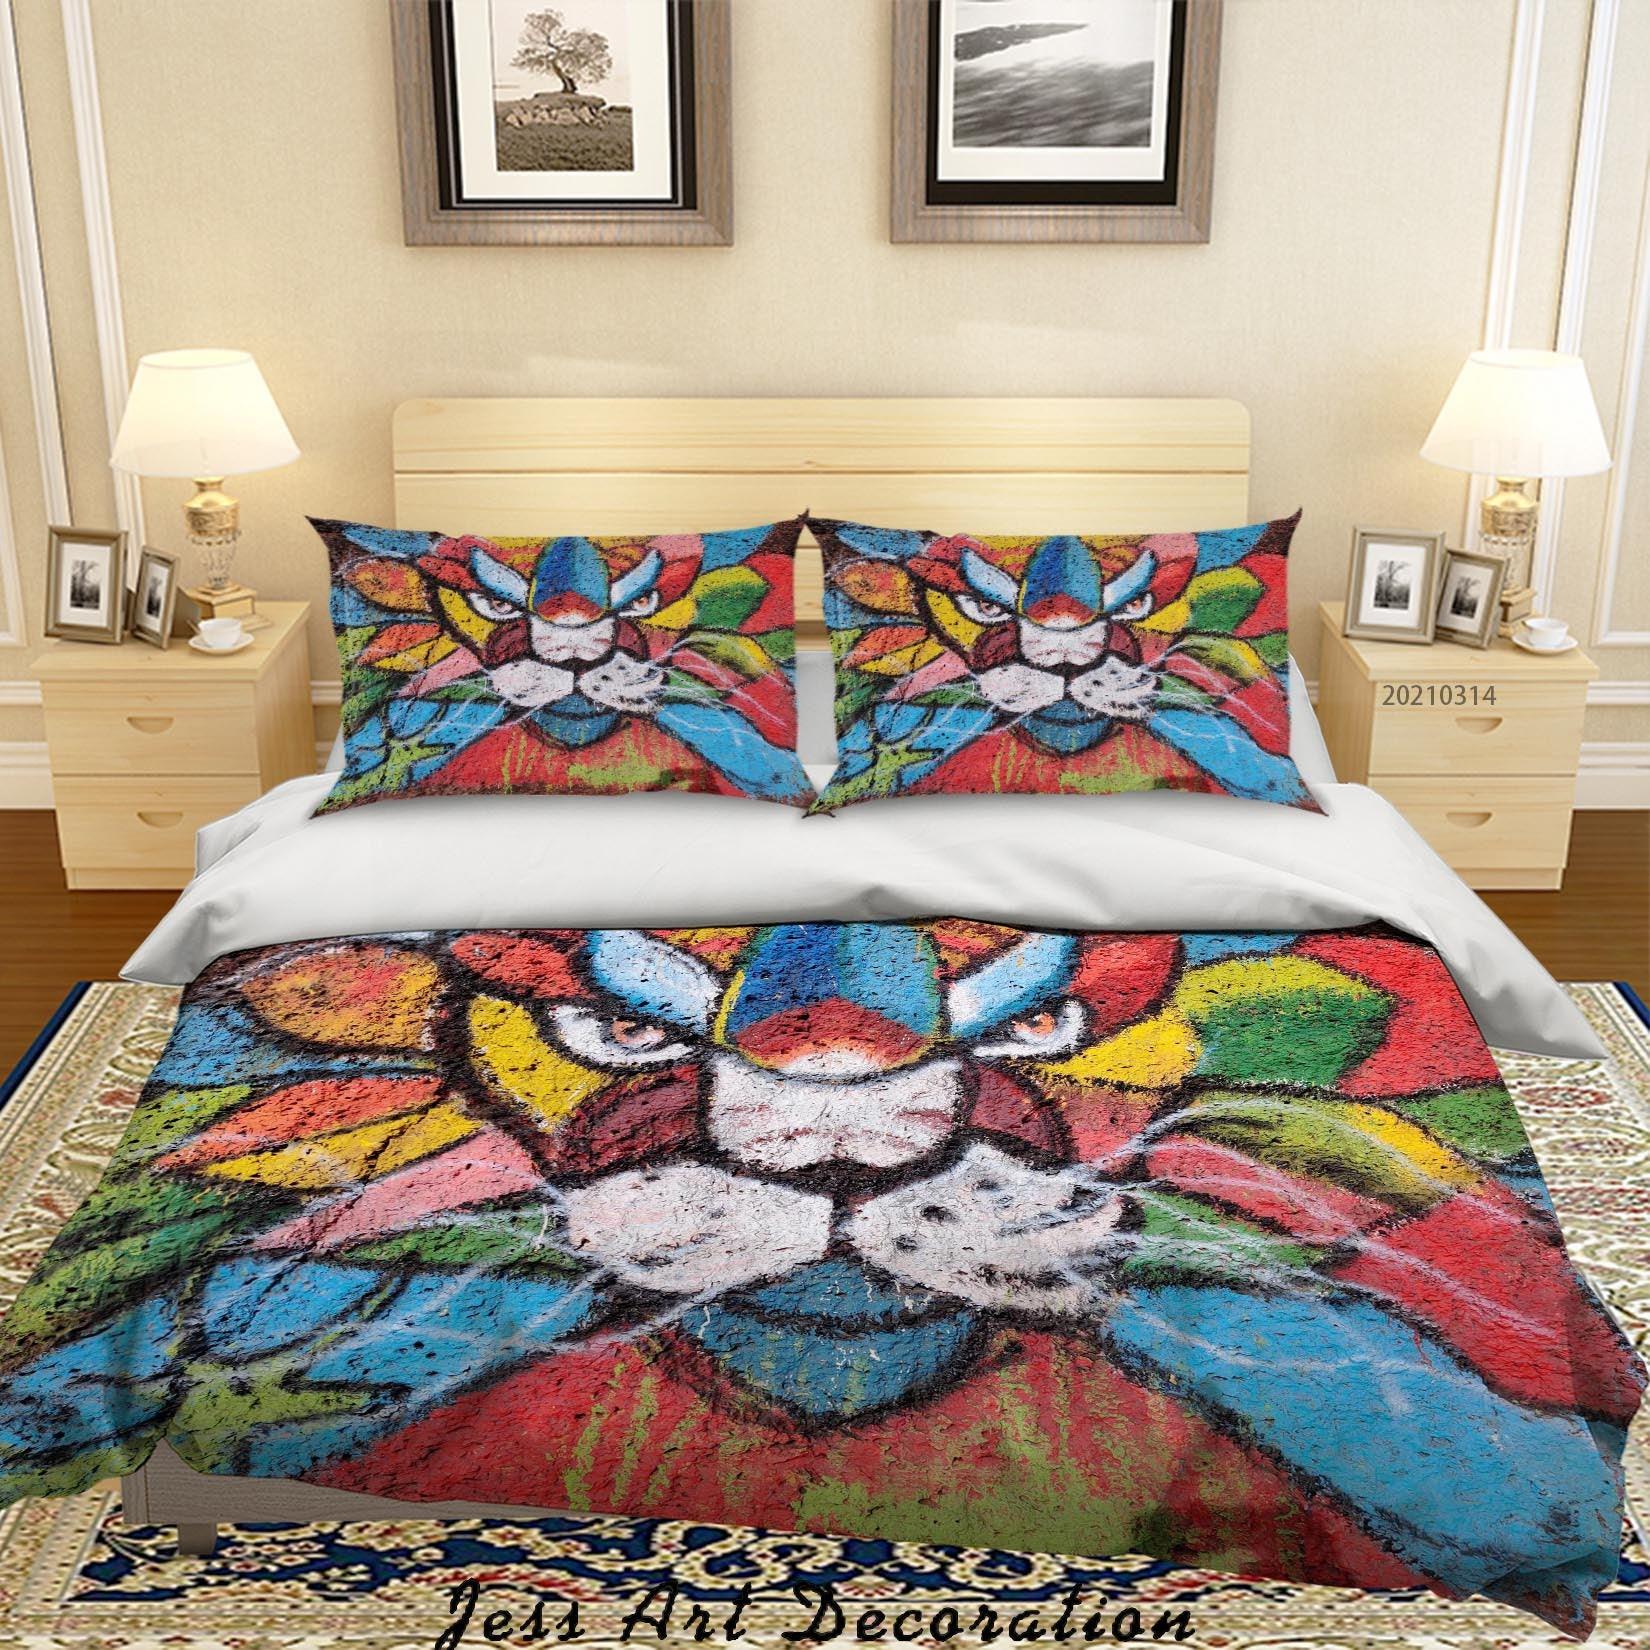 3D Abstract Colored Street Graffiti Lion Quilt Cover Set Bedding Set Duvet Cover Pillowcases 192- Jess Art Decoration